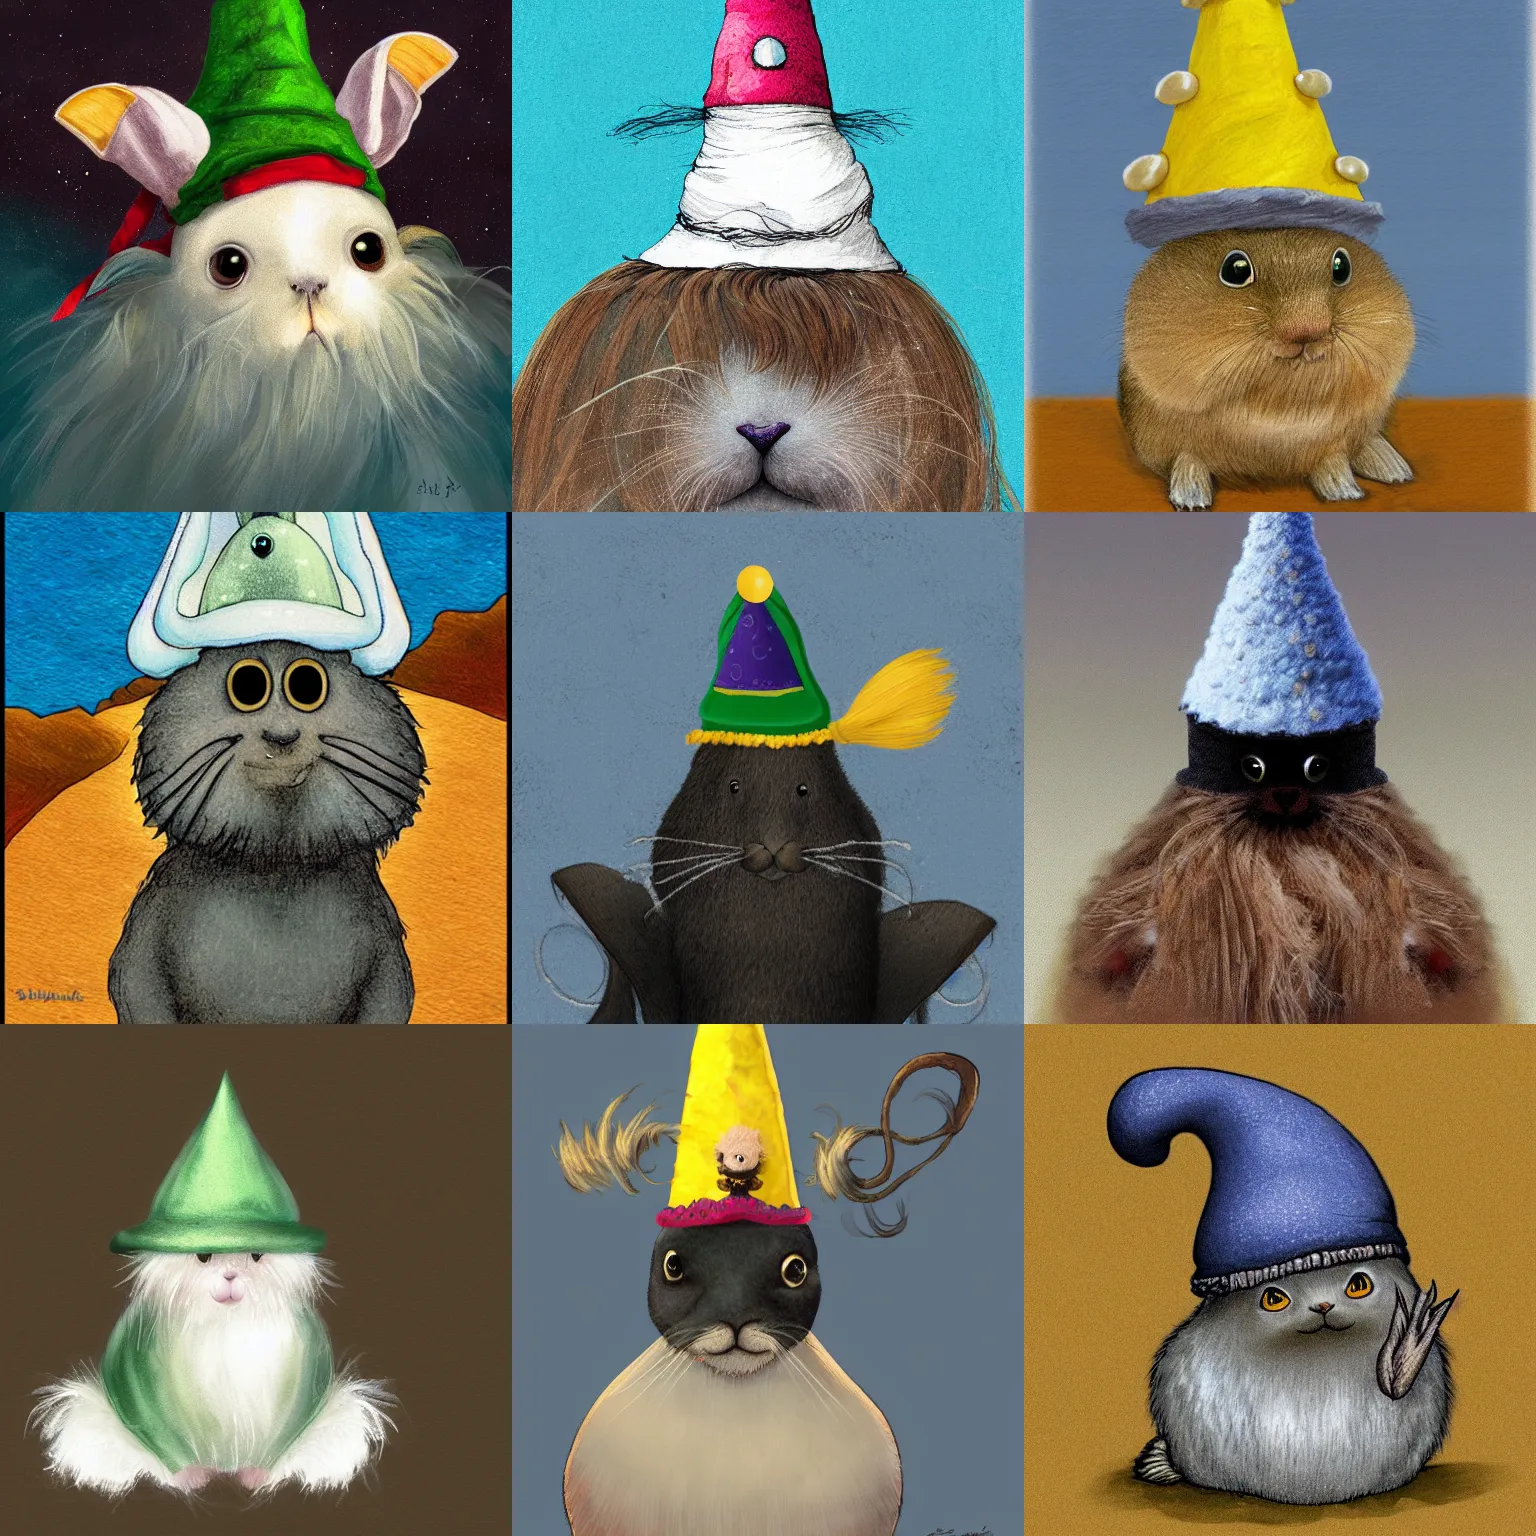 Prompt: a photo of a sea bunny wearing a wizard hat on it head, digital art,